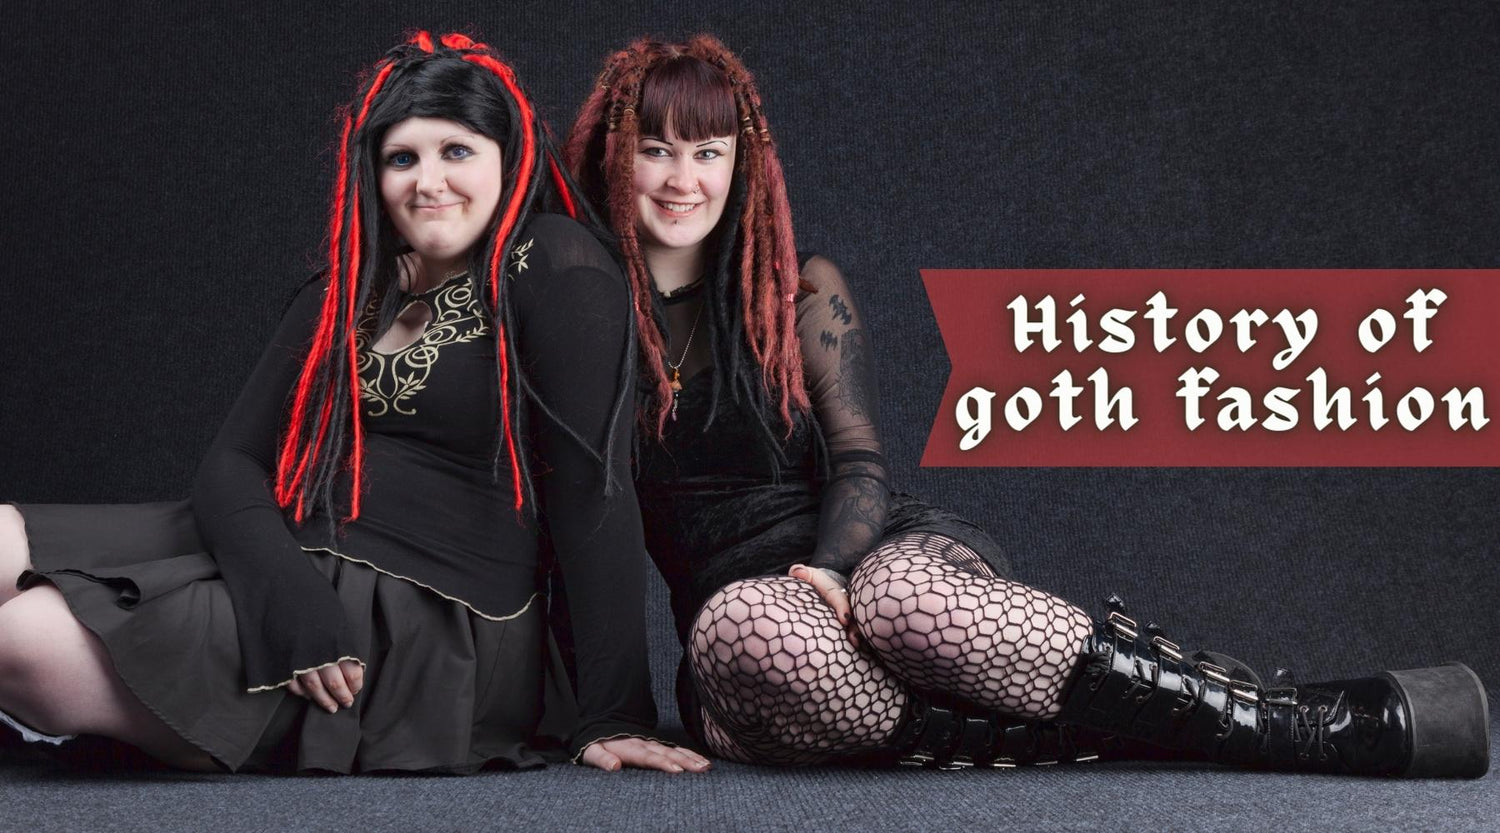 The History Of Goth Fashion by Arcane Trail